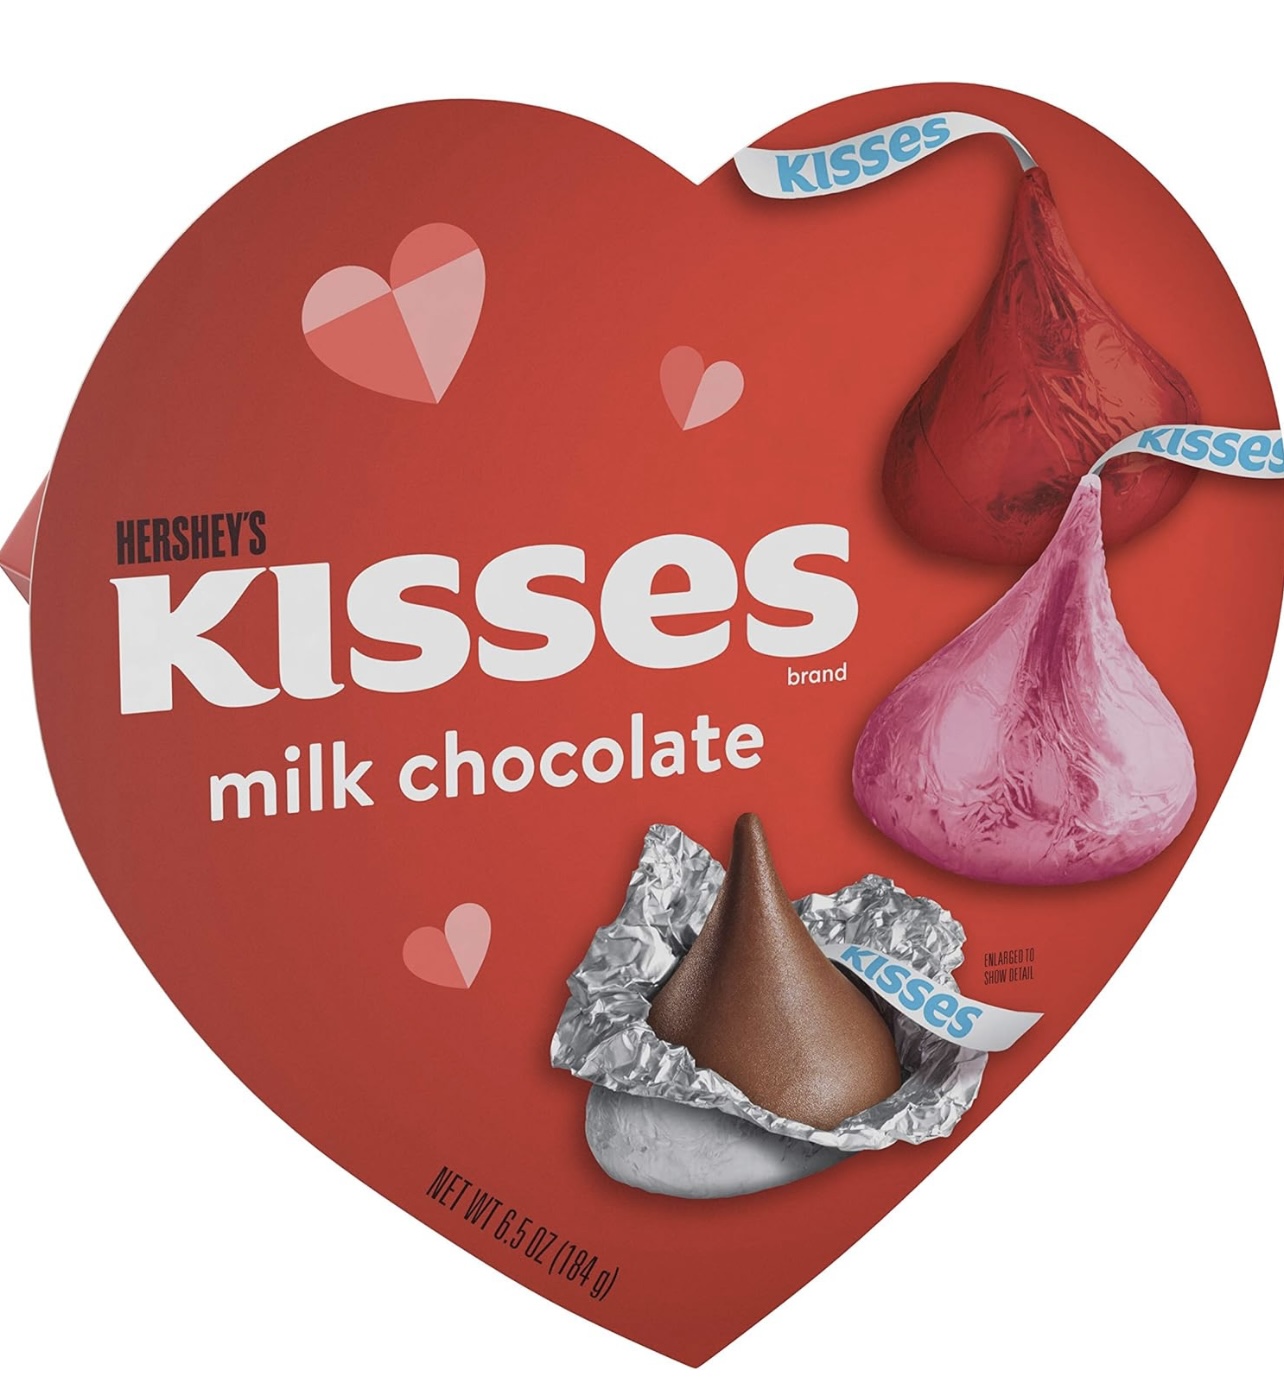 HERSHEY'S KISSES Milk Chocolate Candy, V